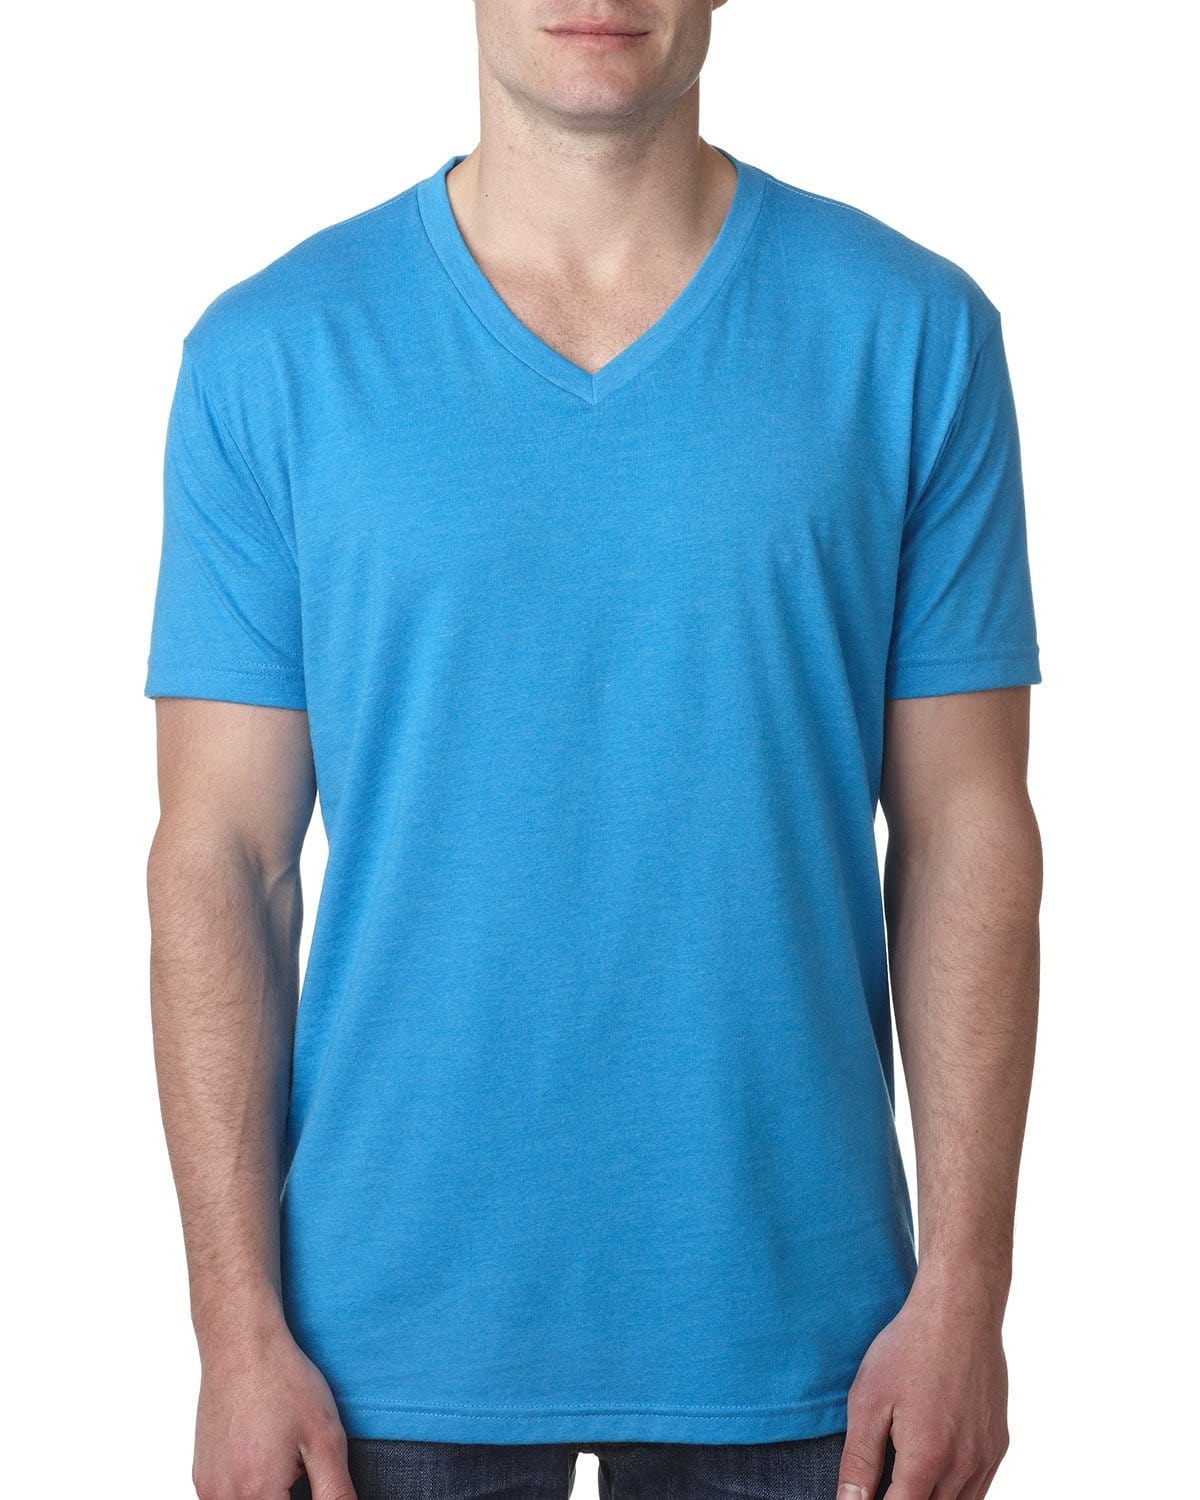 Light Blue V Neck Shirt